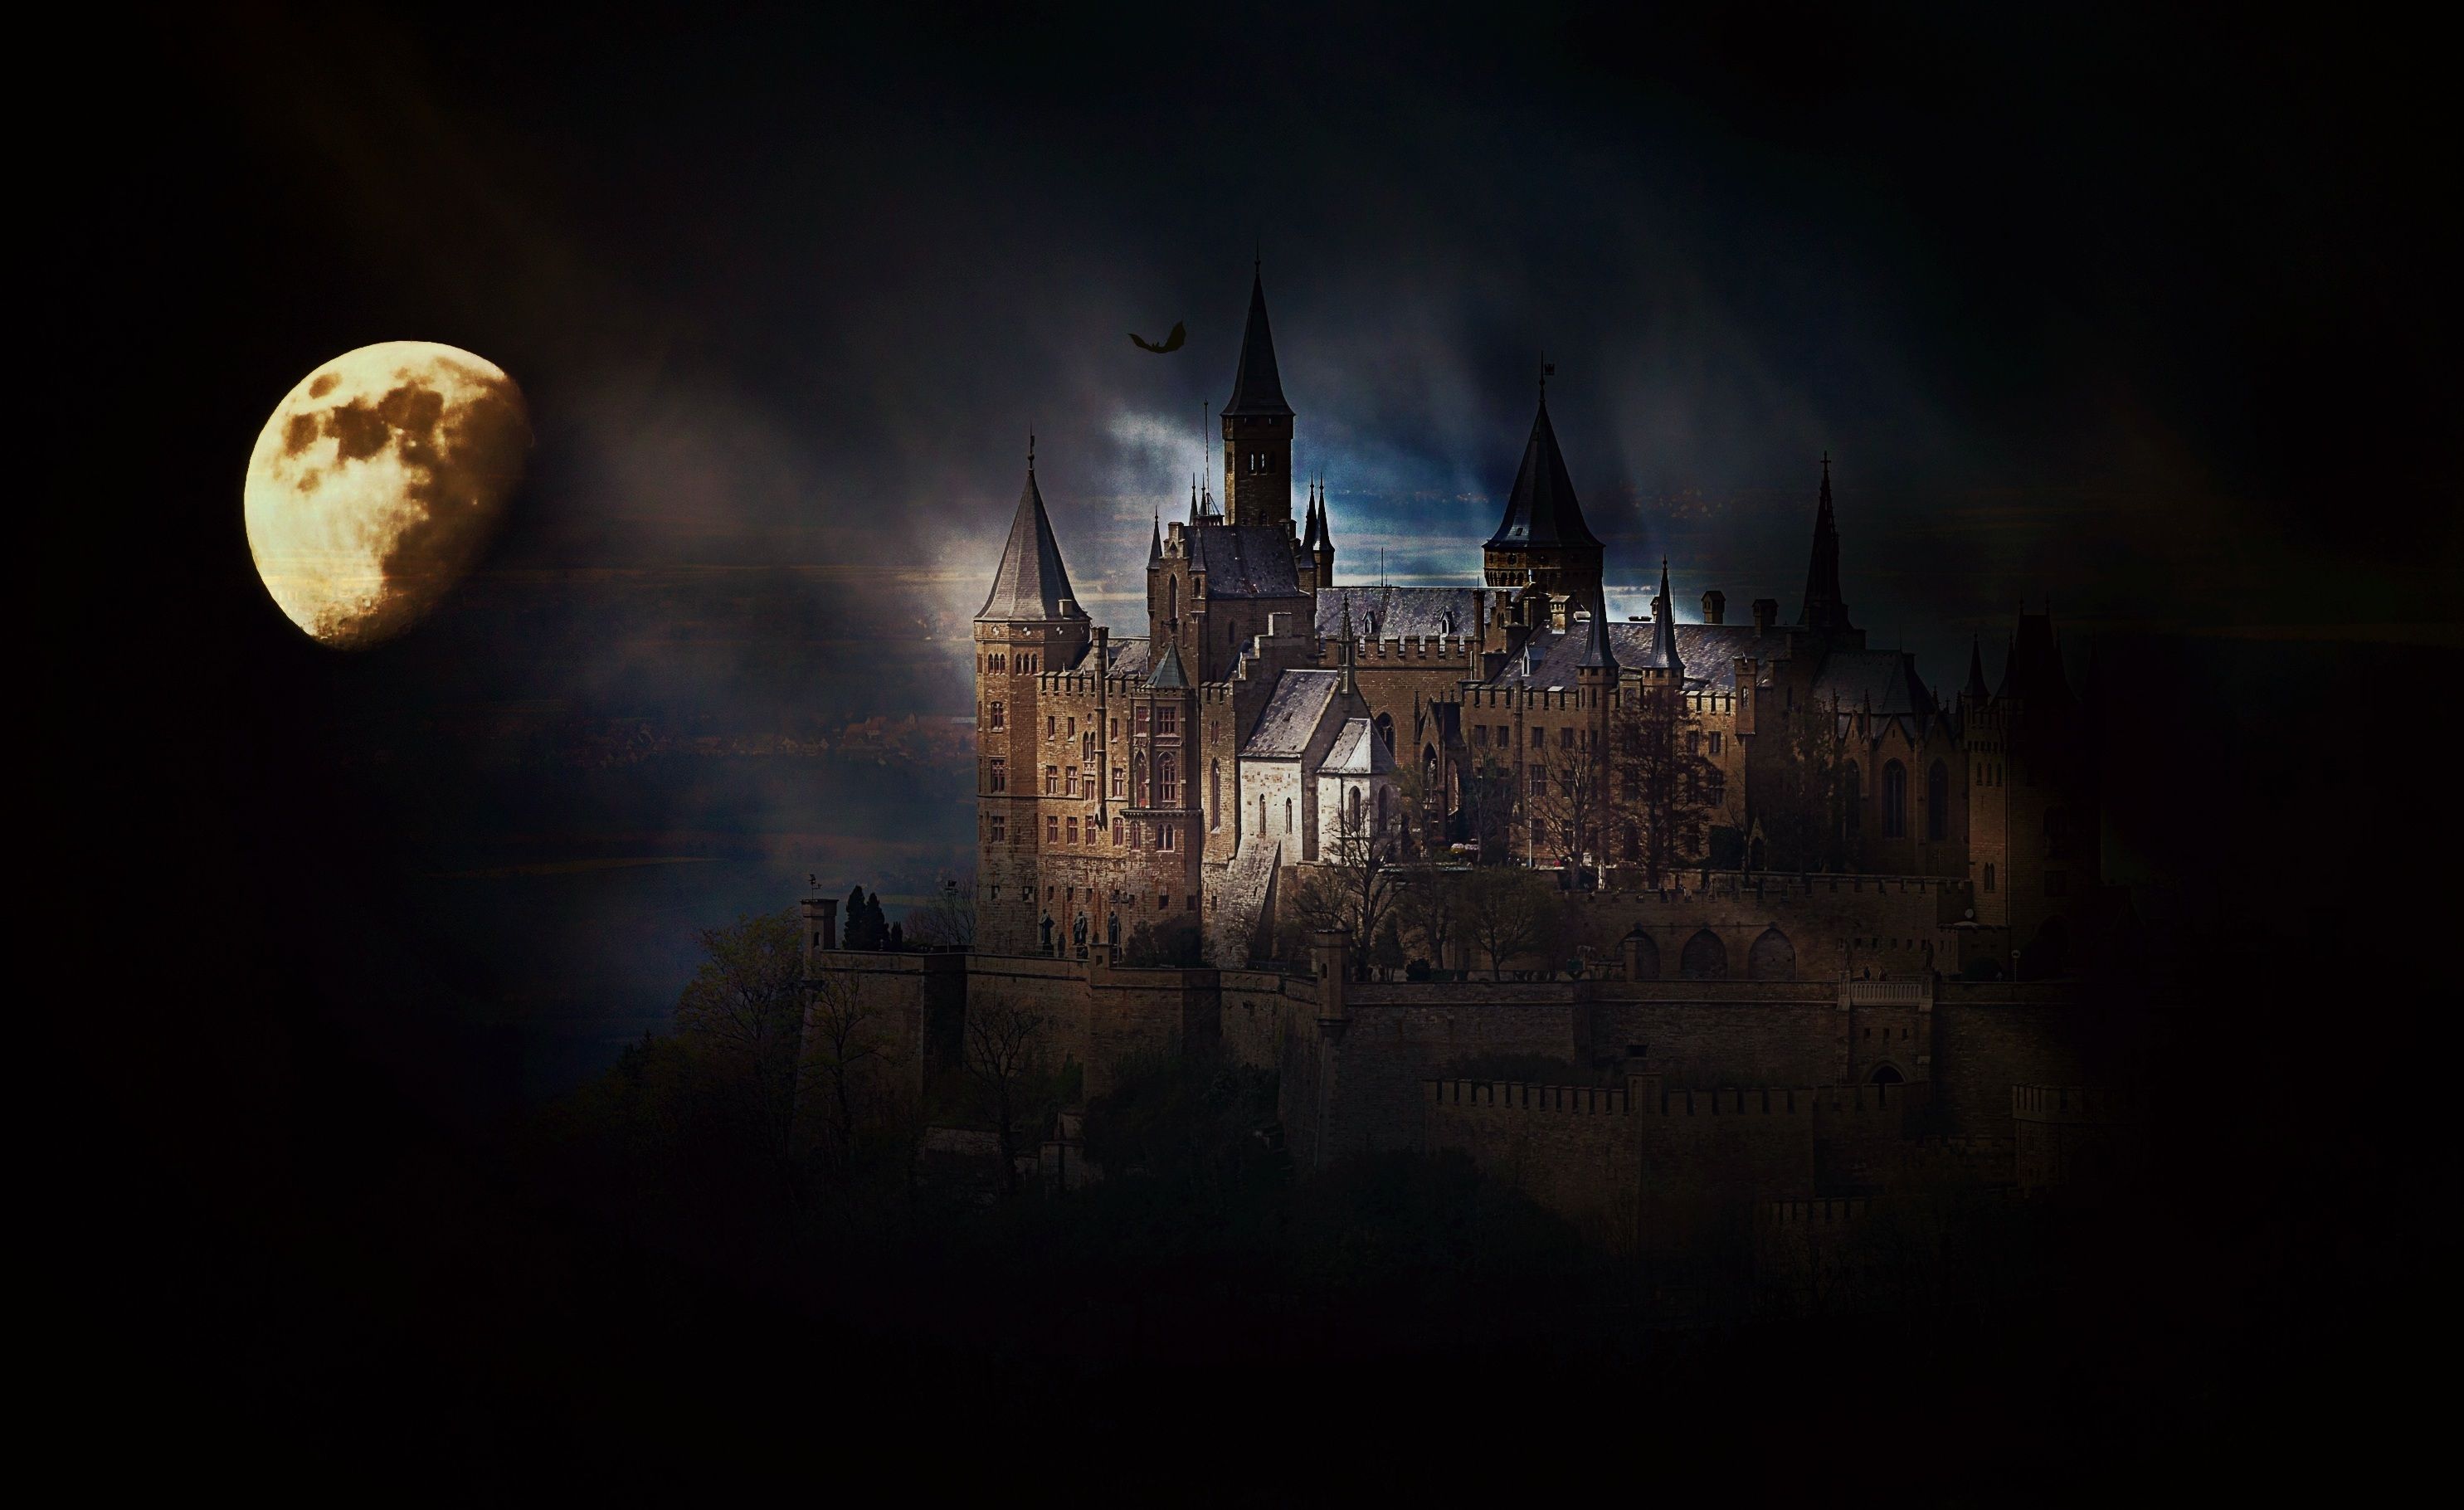 2970x1820 Download Wallpaper Dark Castle With Tags Dark Background Windows Vista Night Castle Moon